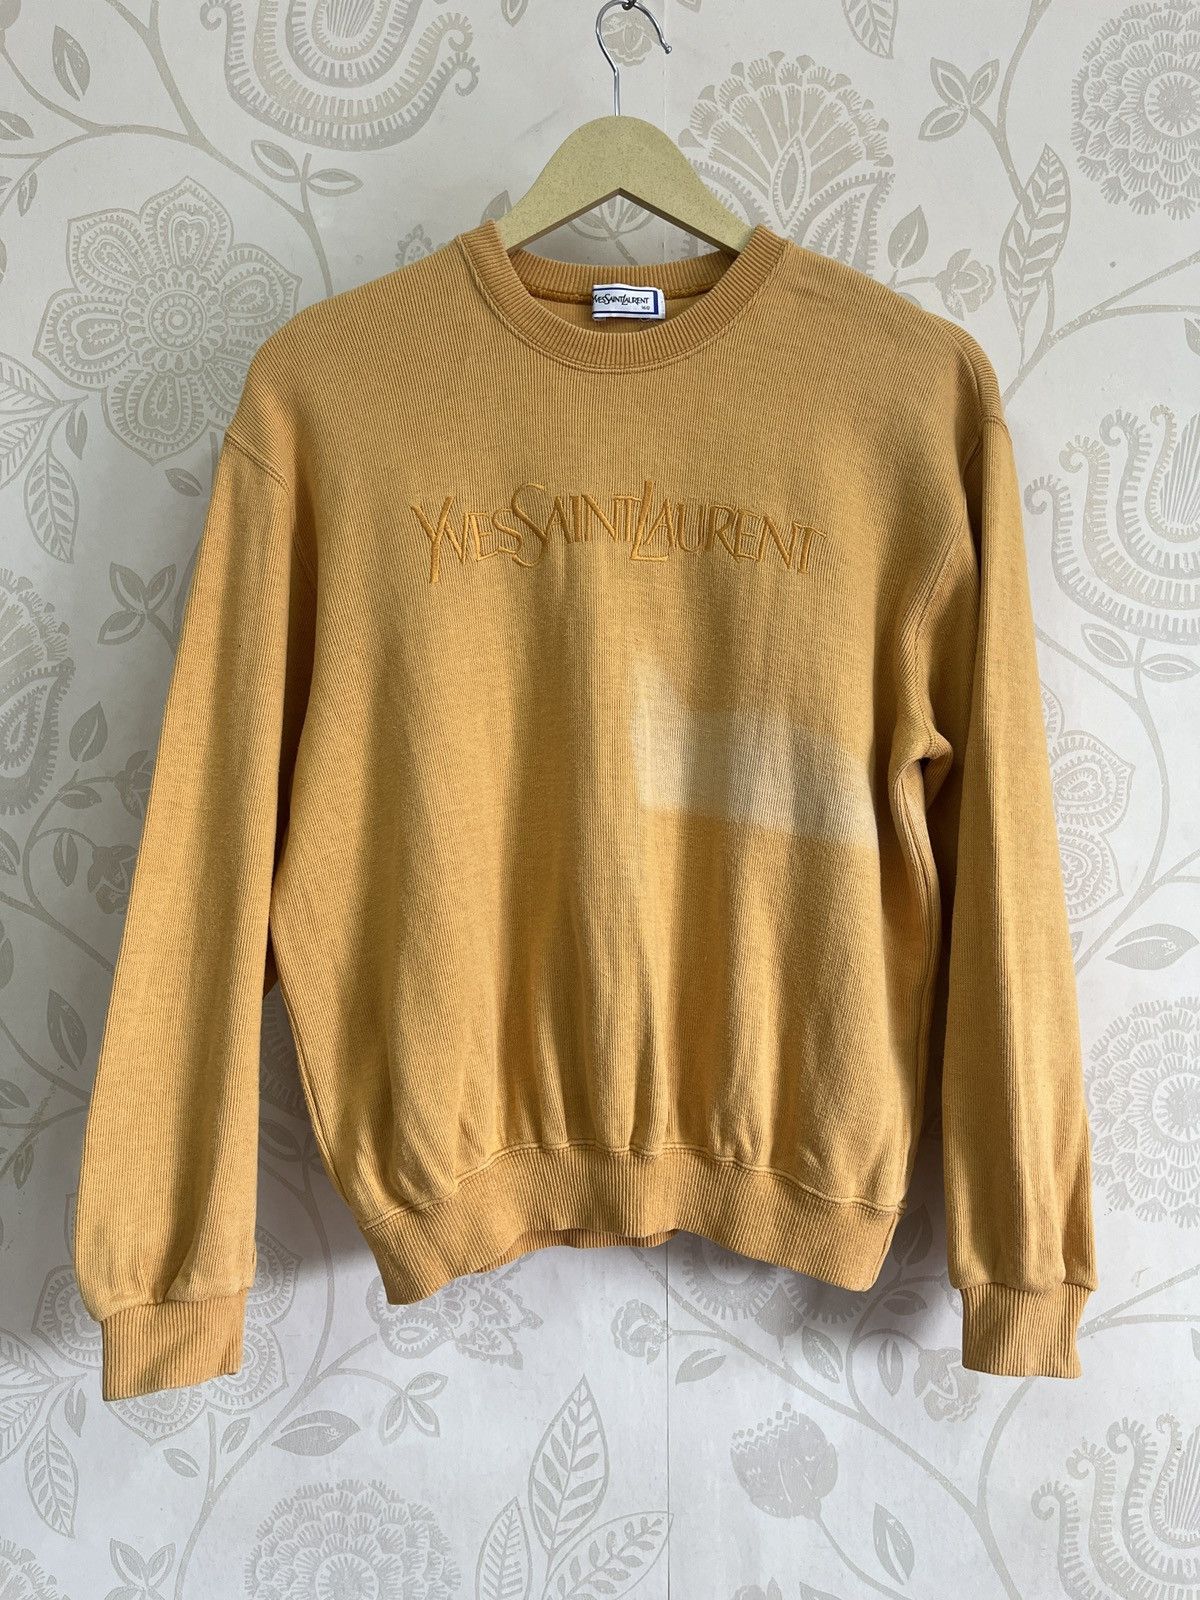 Sun Faded Vintage Yves Saint Laurent Sweater - 3